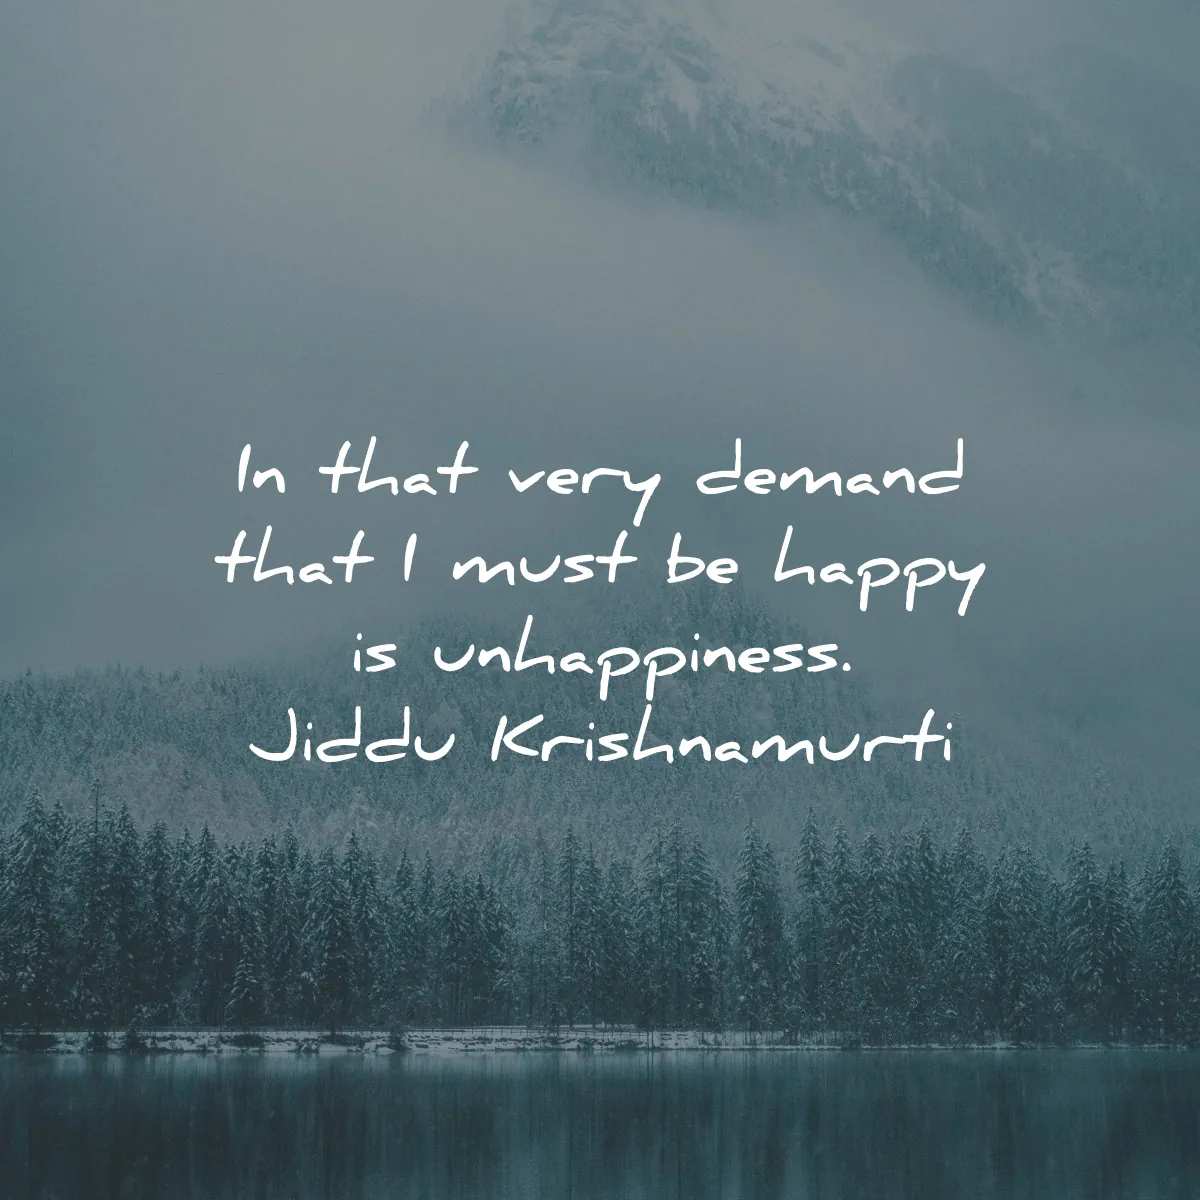 jiddu krishnamurti quotes demand happy unhappiness wisdom